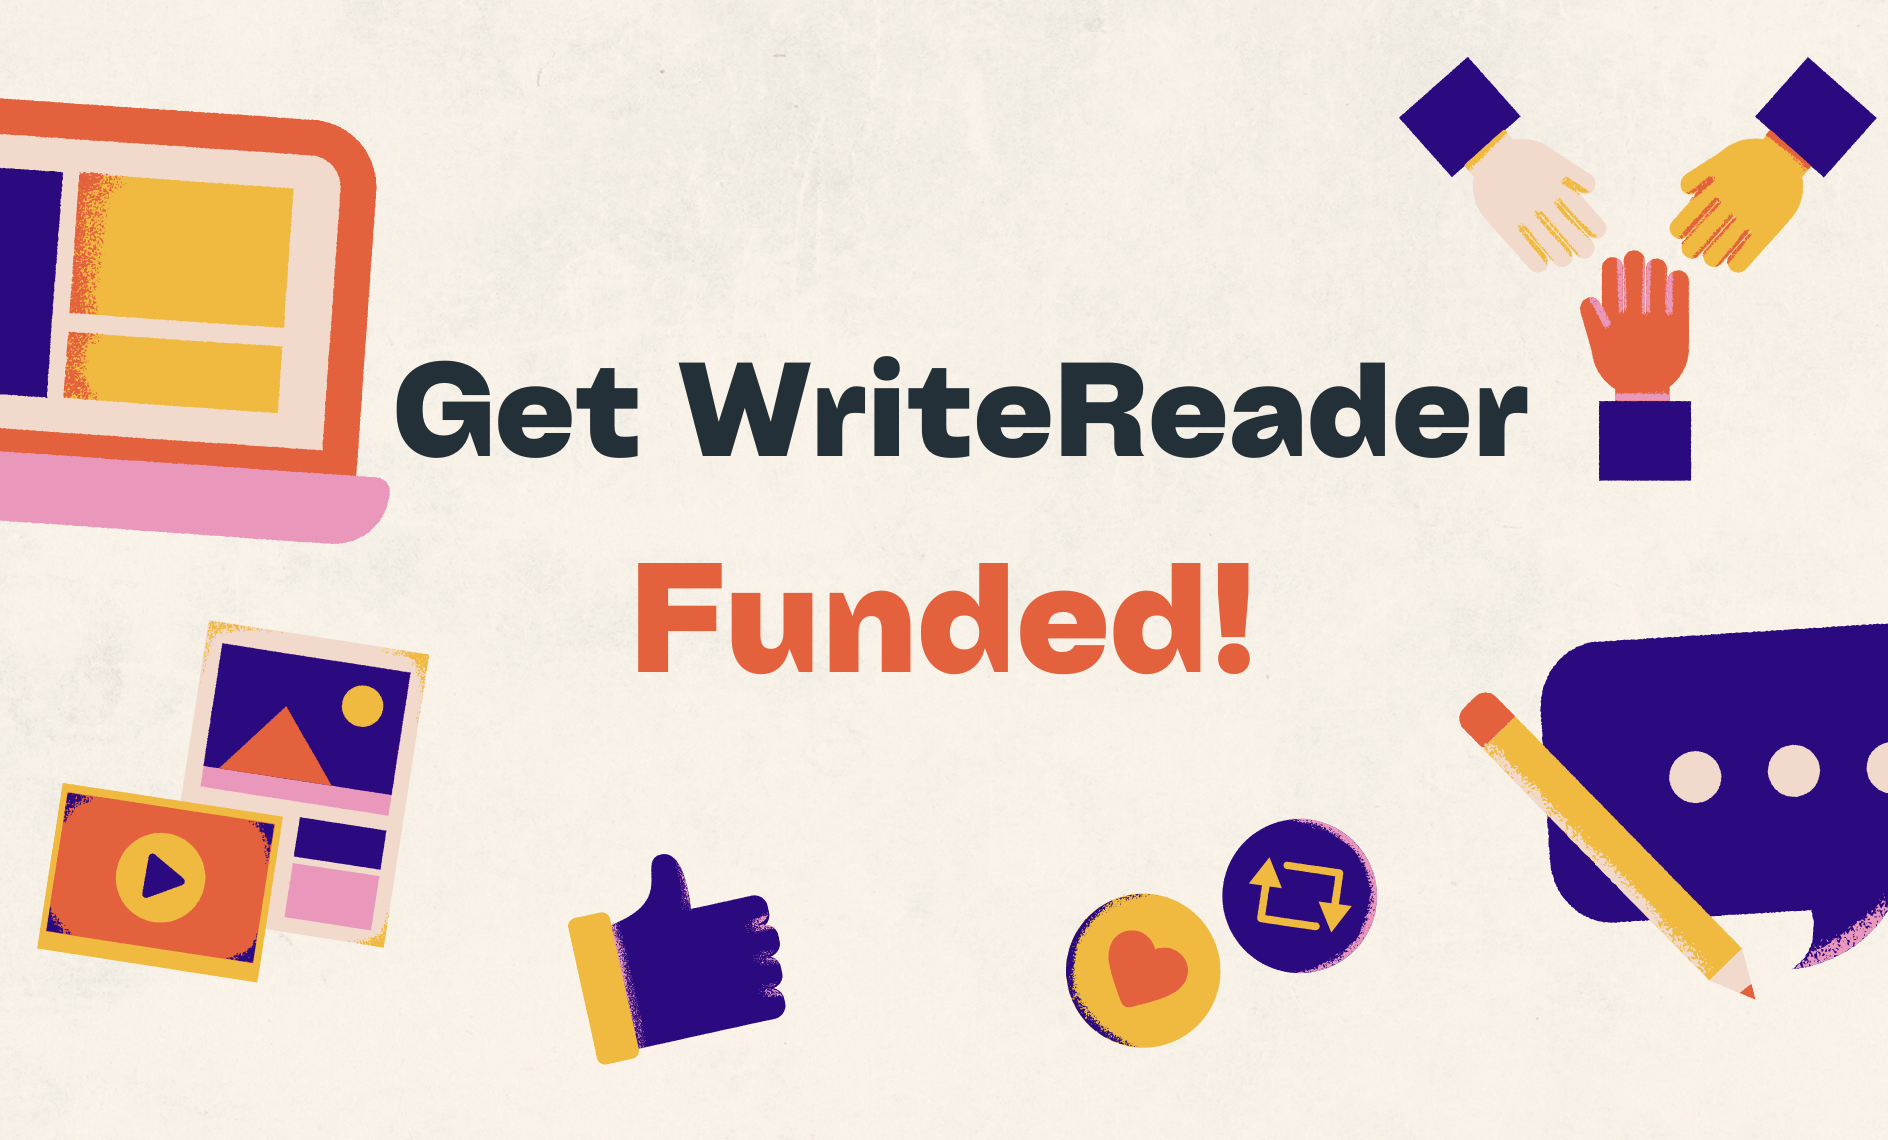 WriteReader - Book creating tool to increase students literacy skills